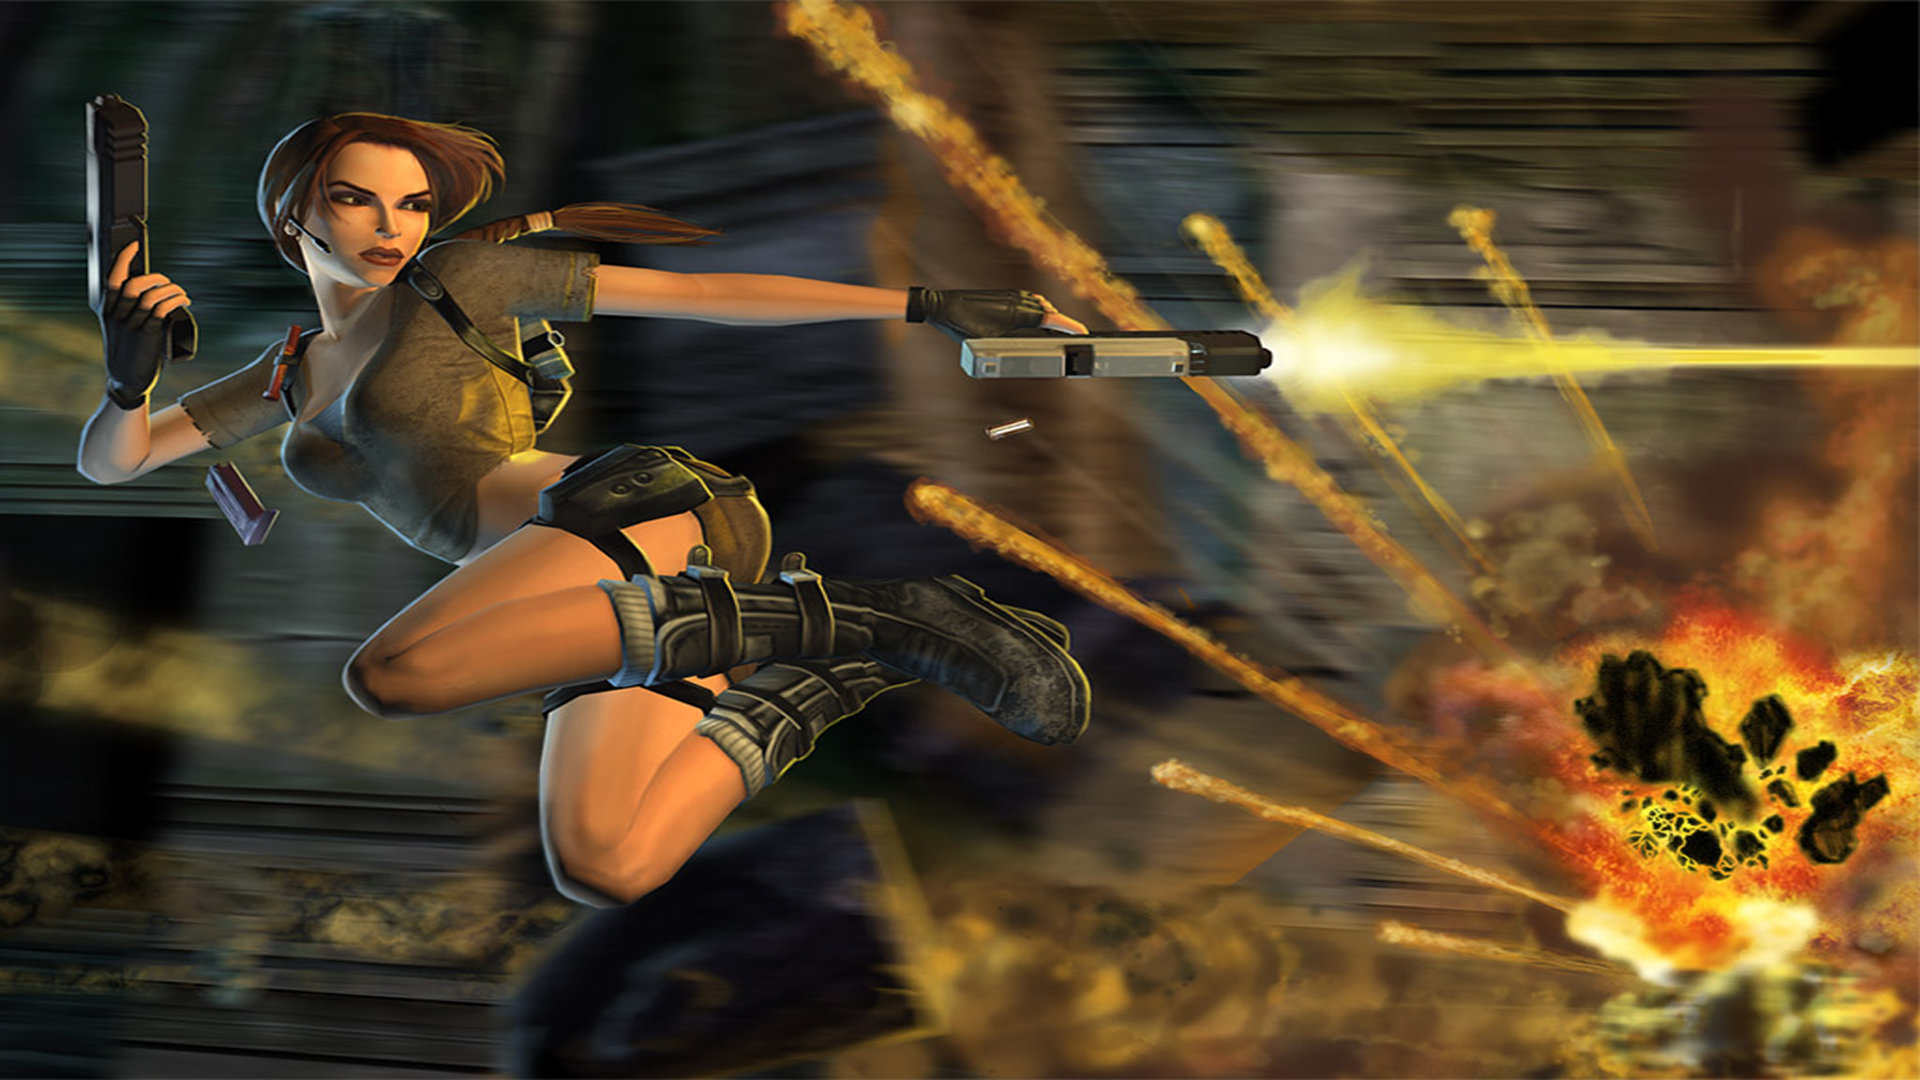 Download full hd 1080p Tomb Raider: Legend desktop background ID:353256 for free